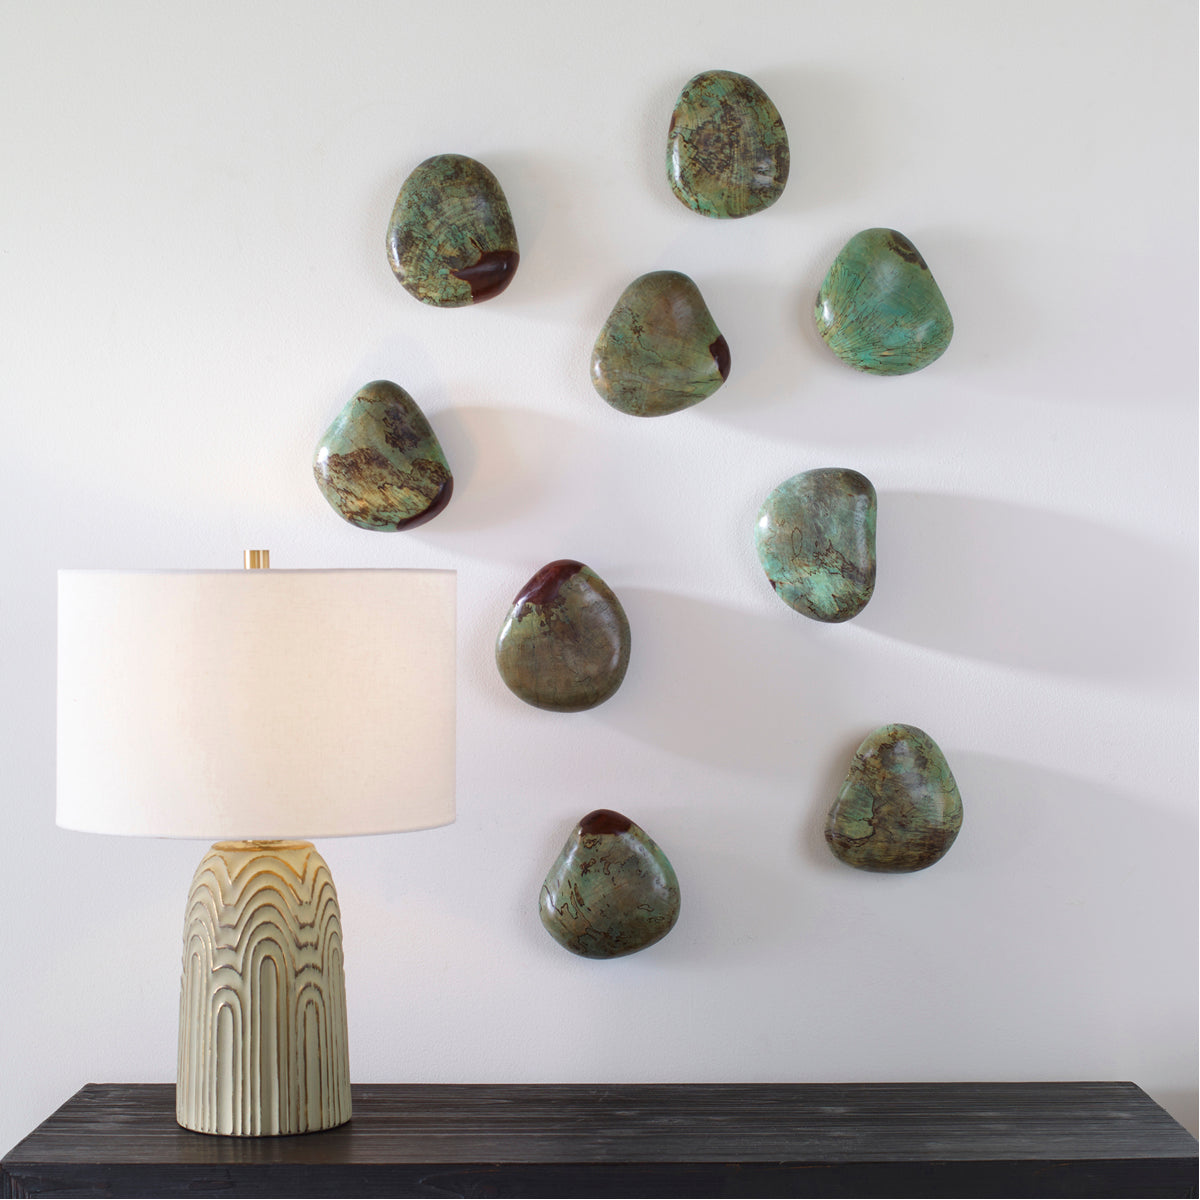 Uttermost Pebbles Wood Wall Decor, 9-Piece Set